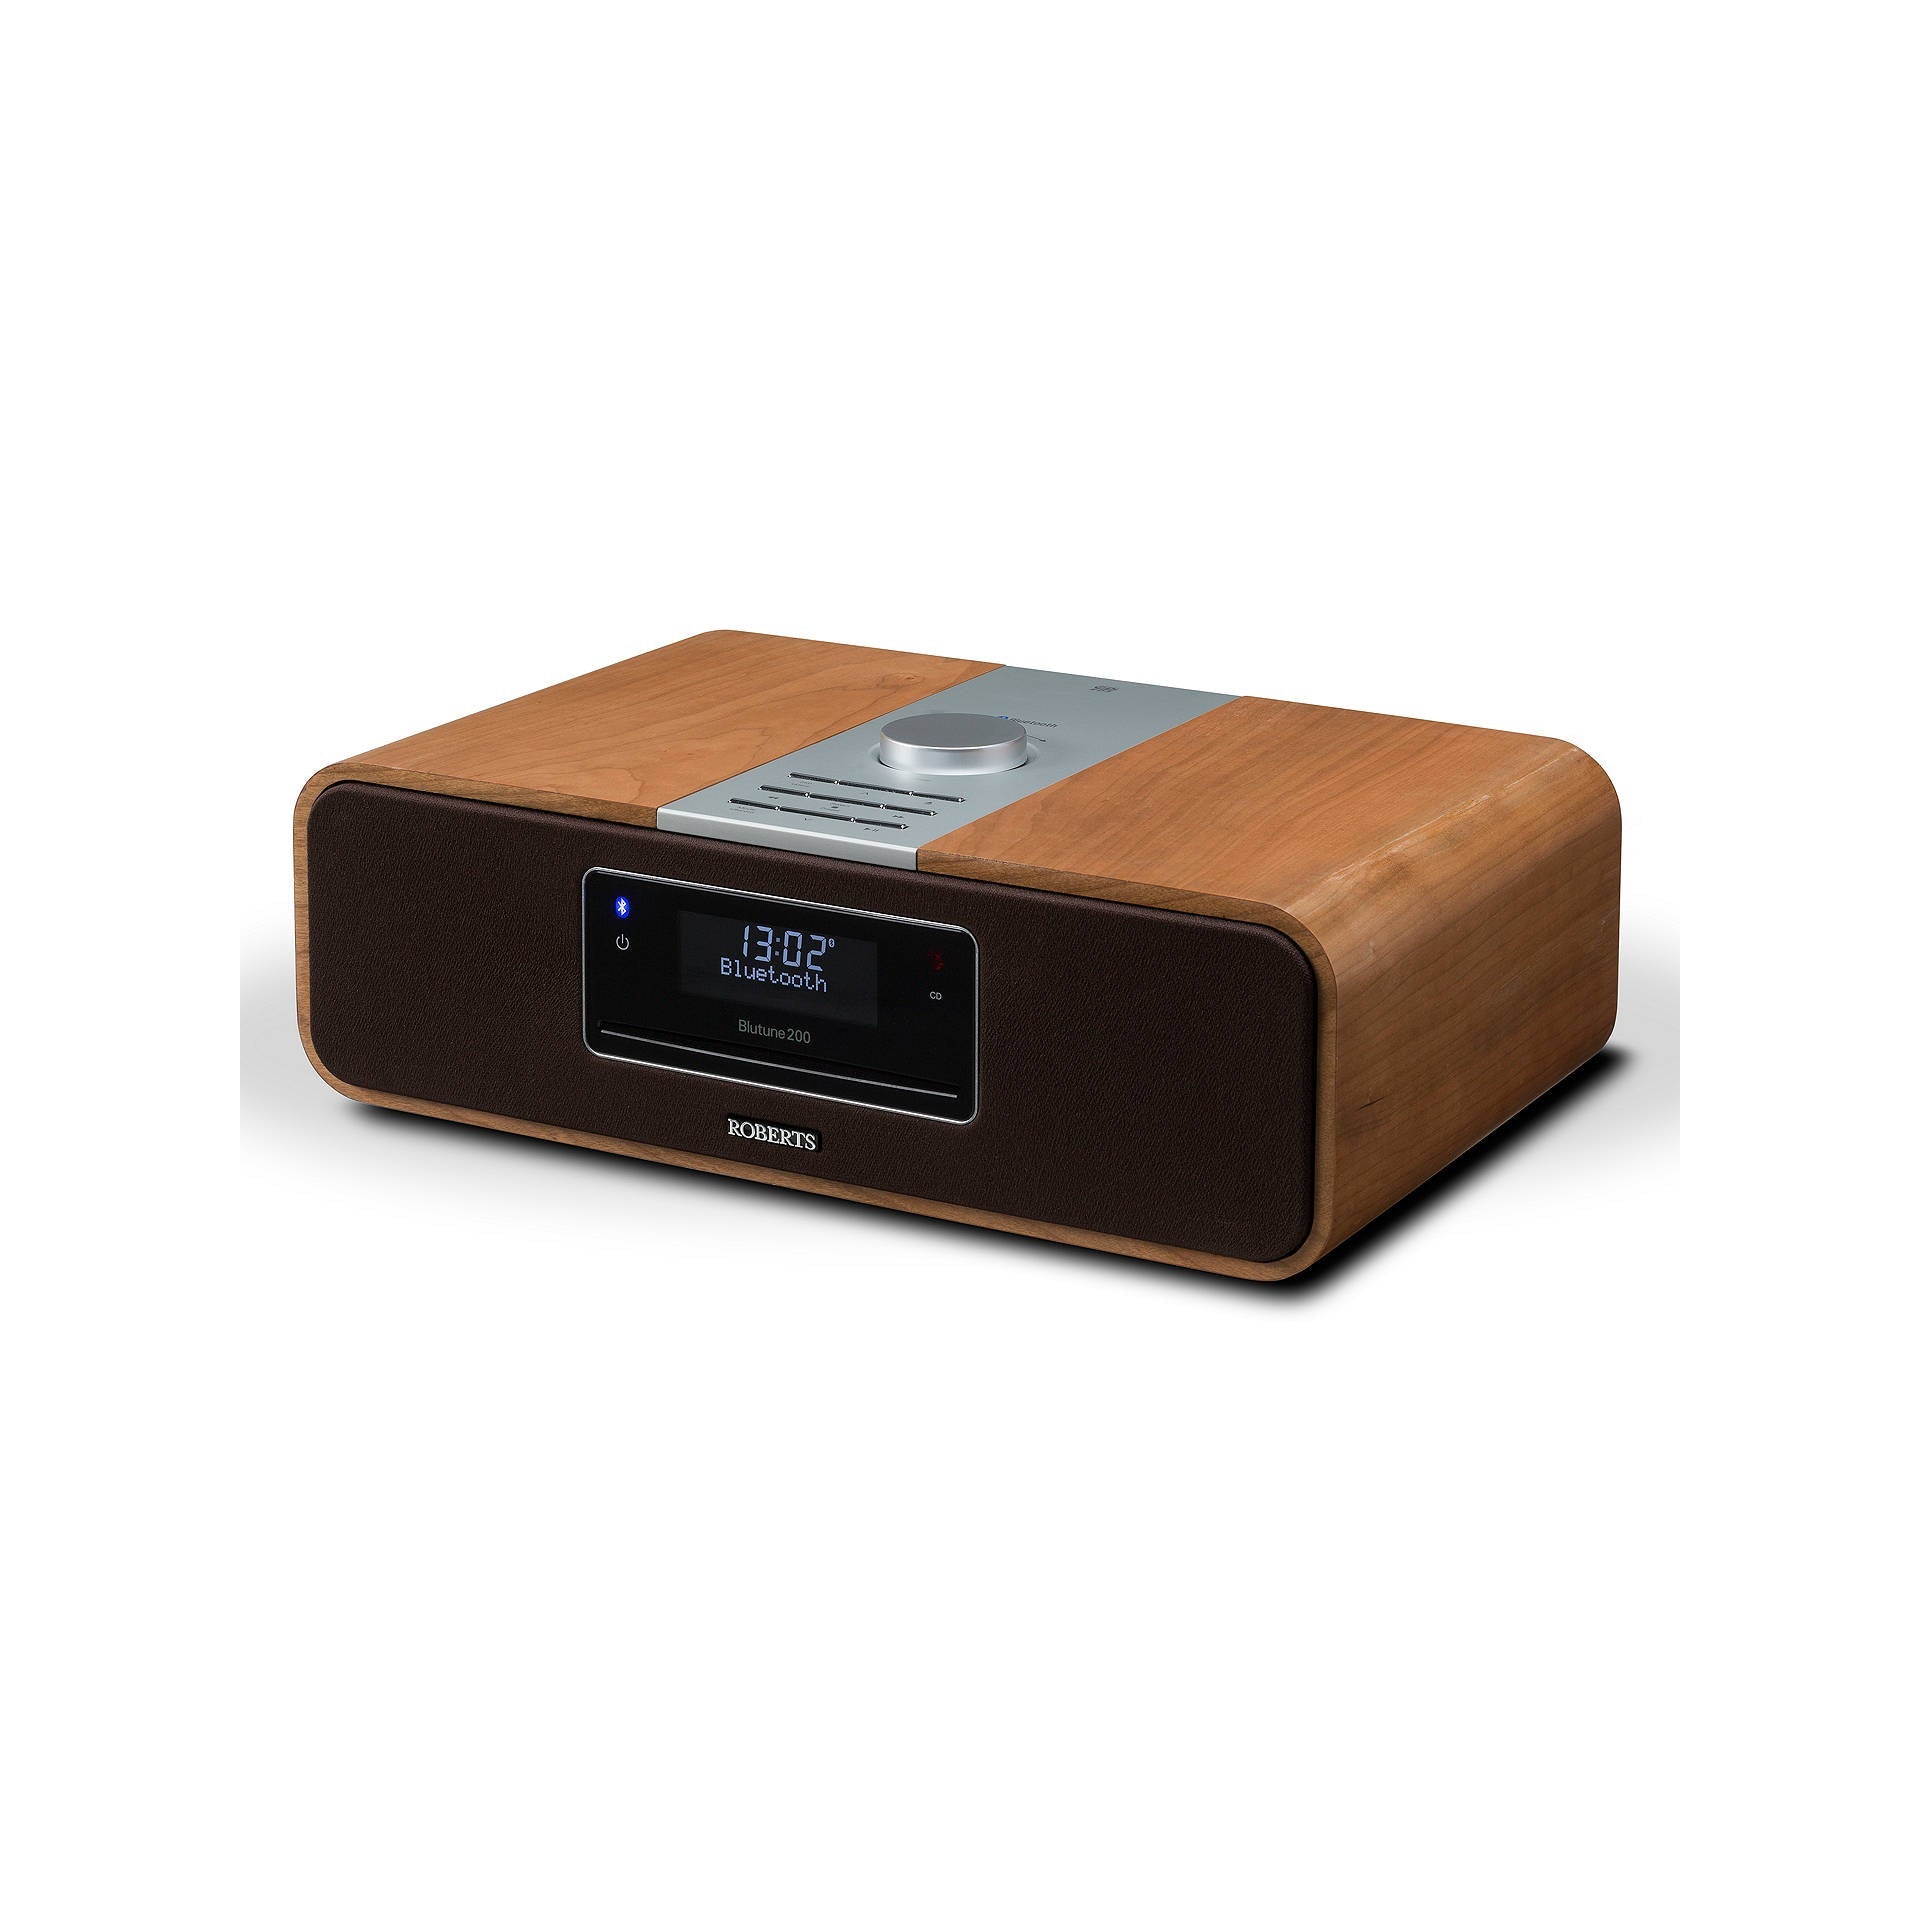 Roberts Blutune 200 DAB/DAB+/FM/CD/USB/SD/Bluetooth Sound System - Wood - Refurbished Good